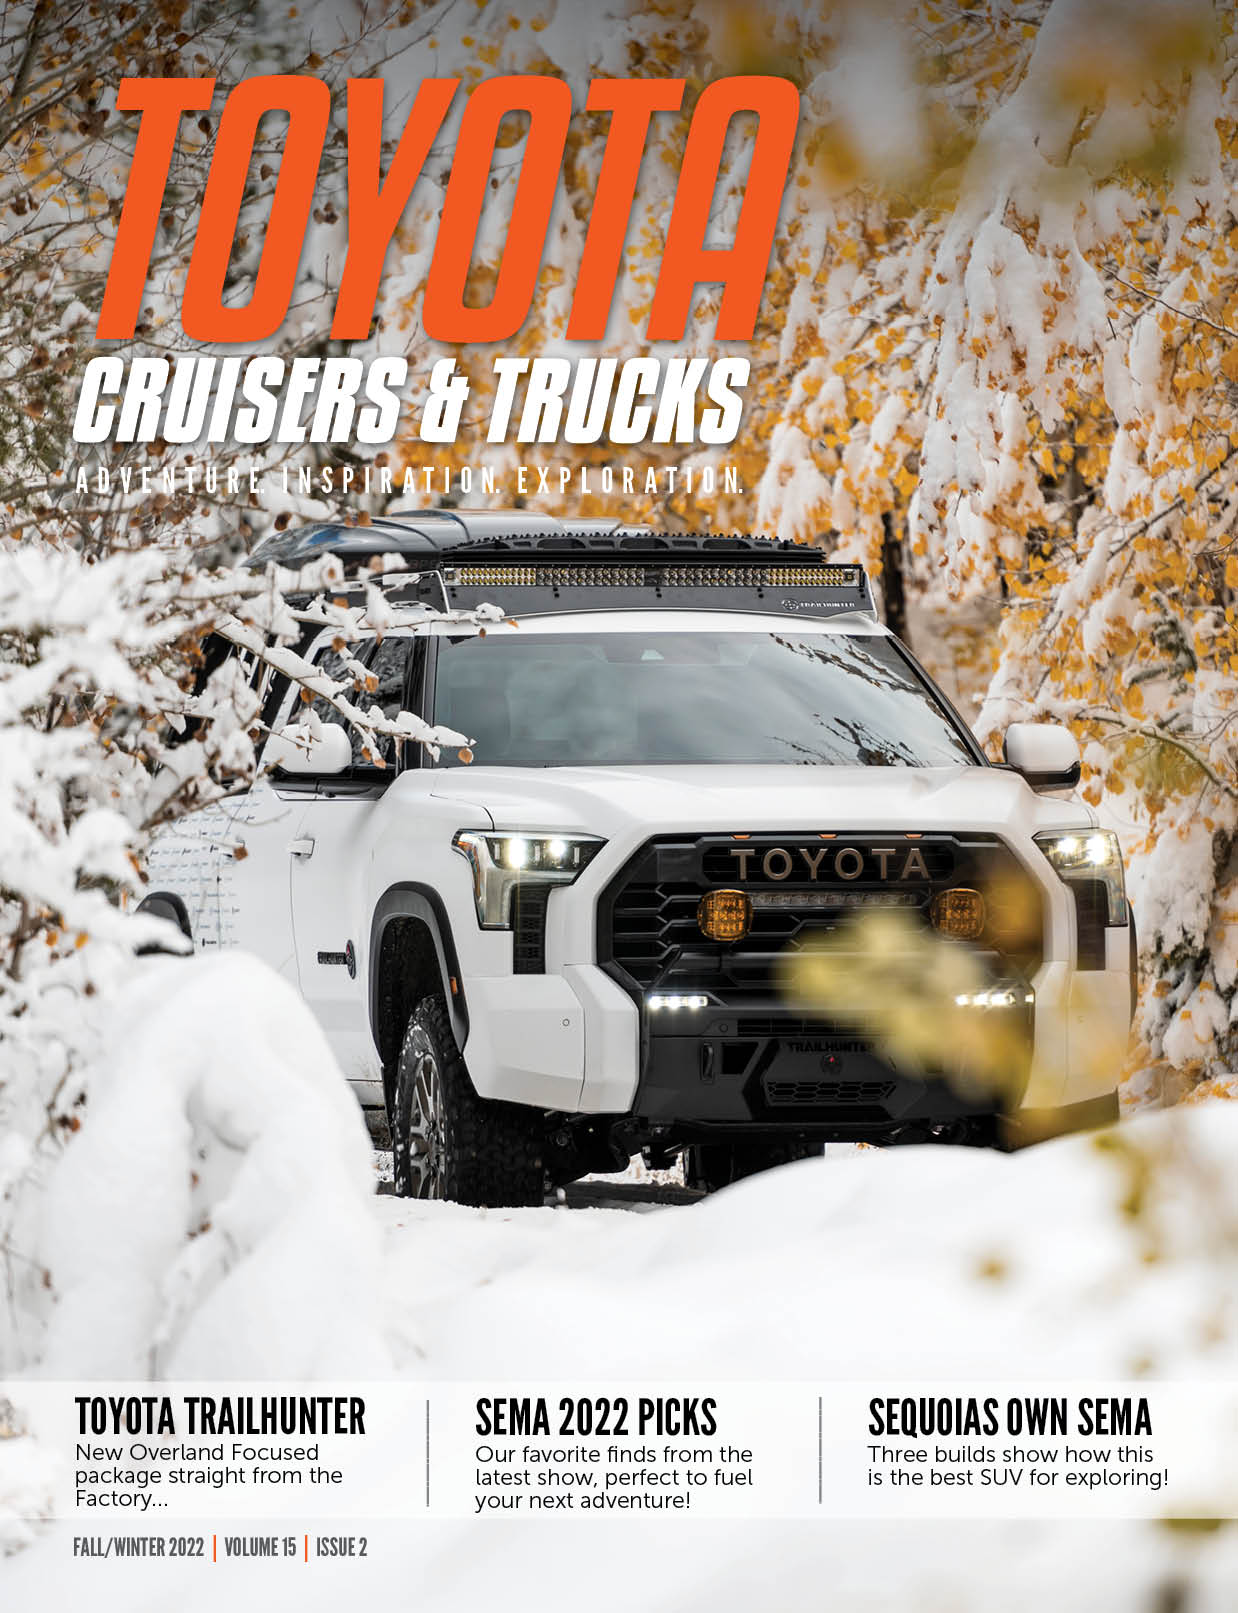 Fall/Winter 2022 Toyota Cruisers & Trucks